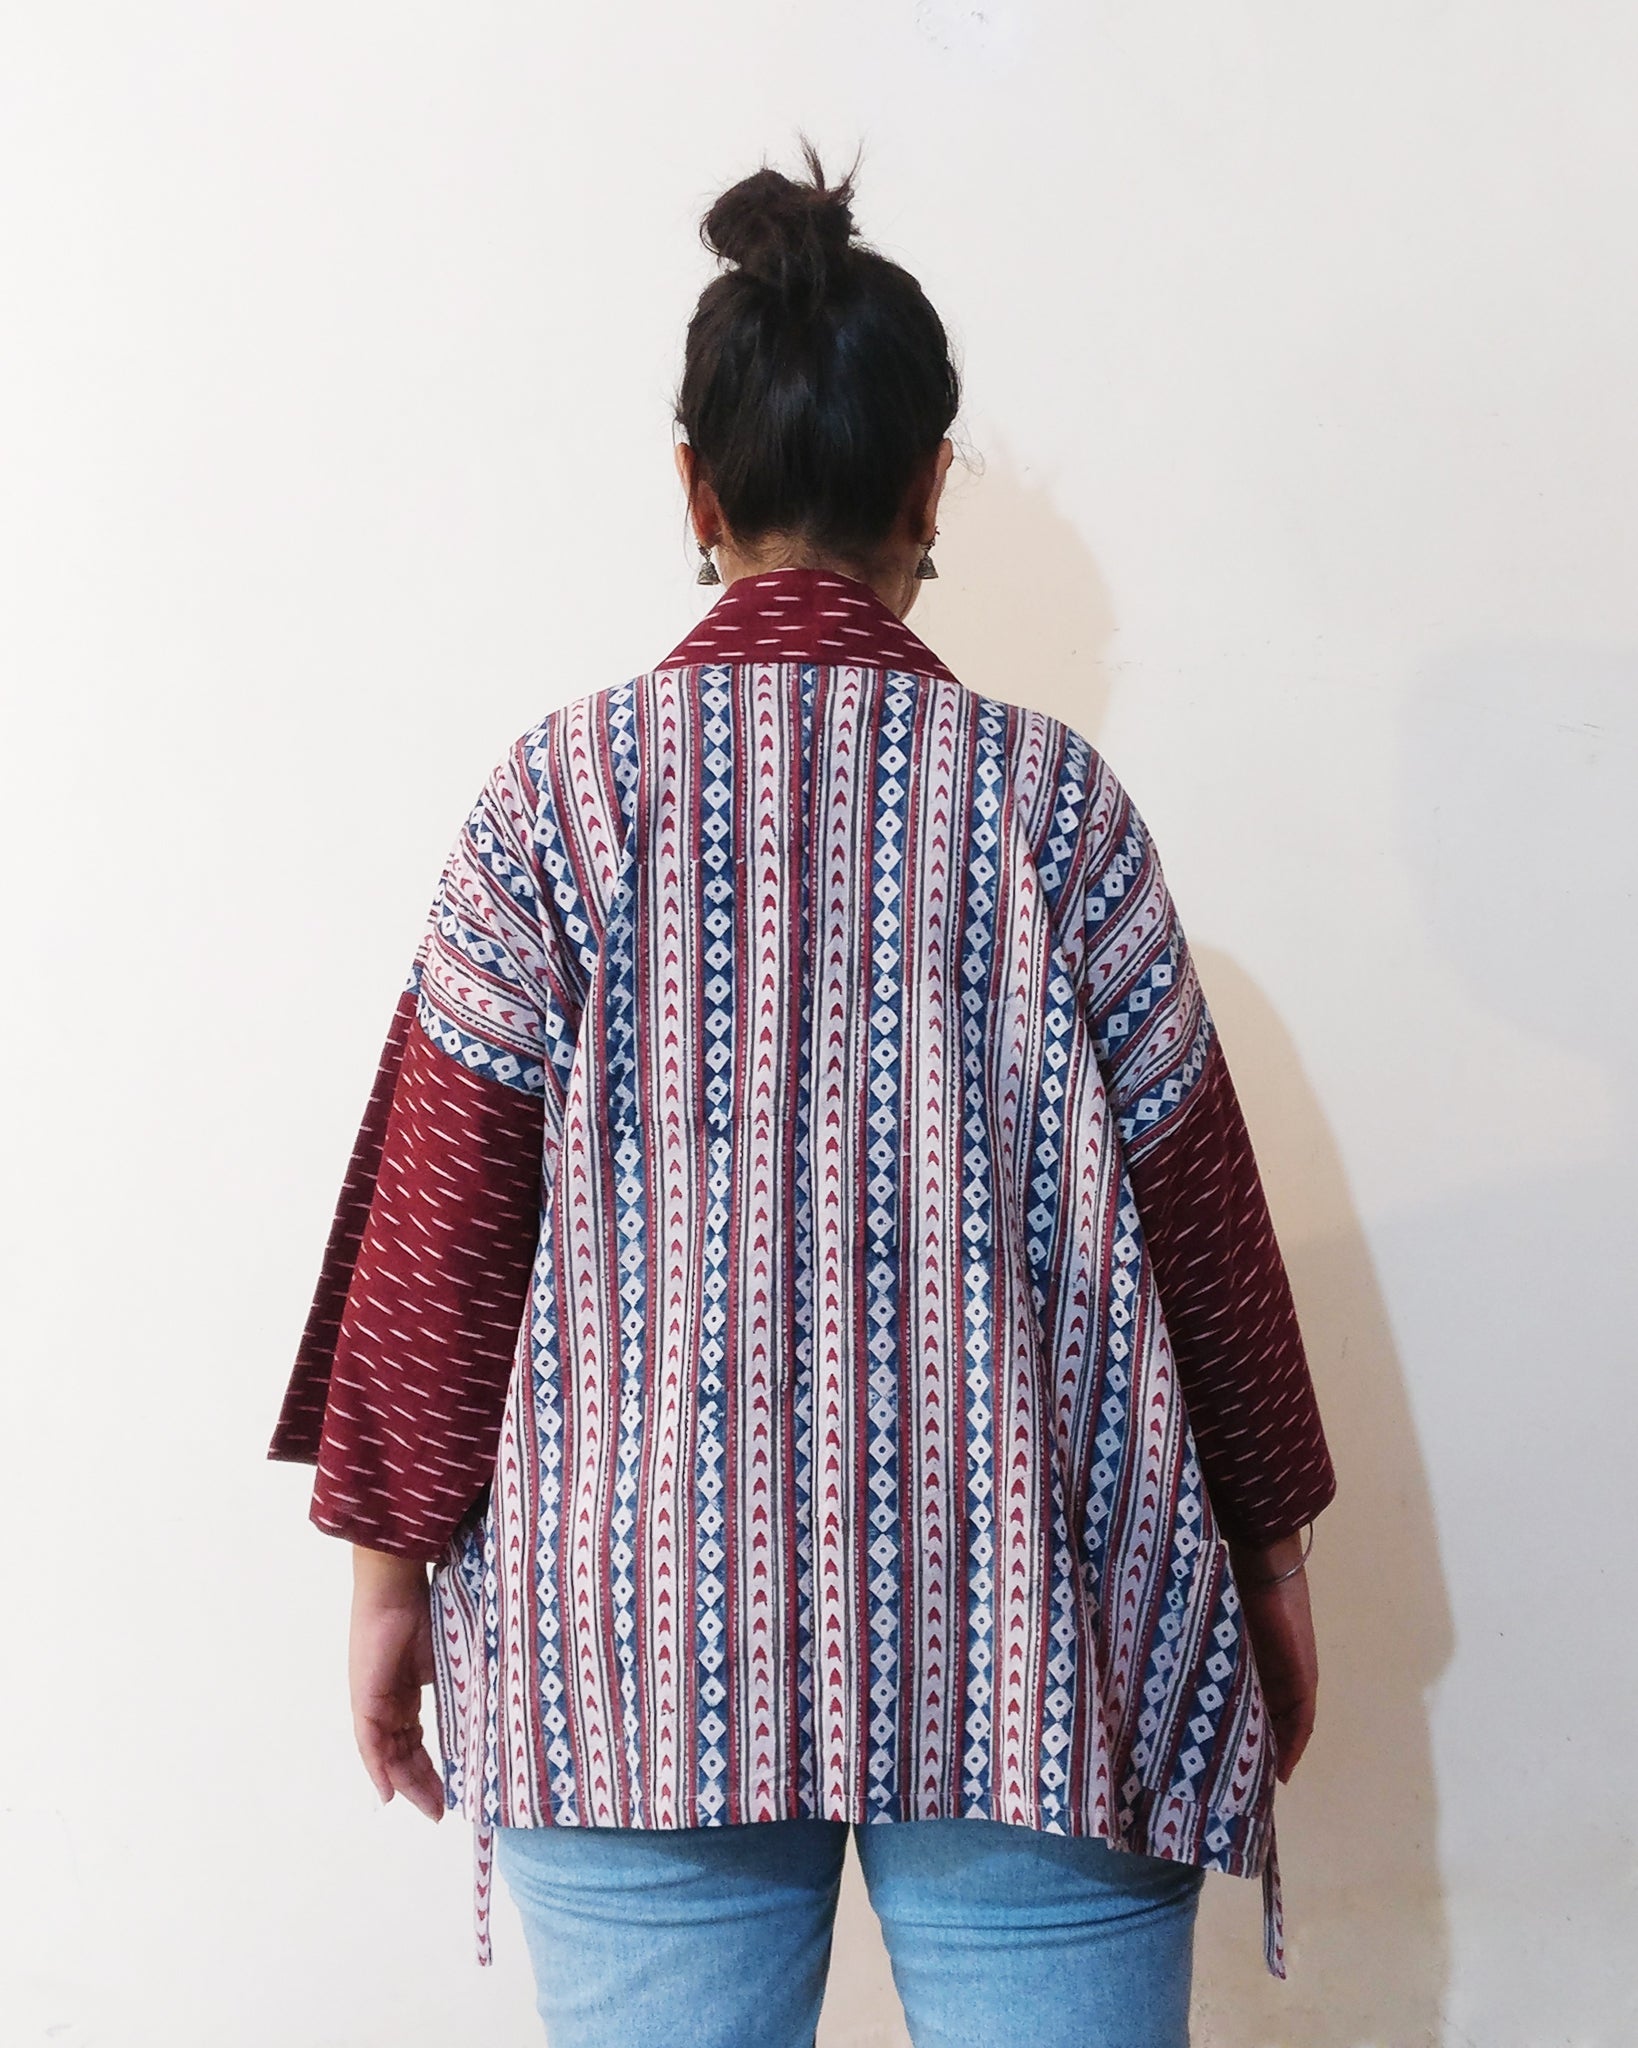 Kimono (Jinbei) Jacket - Red White Navy Geometric Print & Maroon Ikat Sleeves